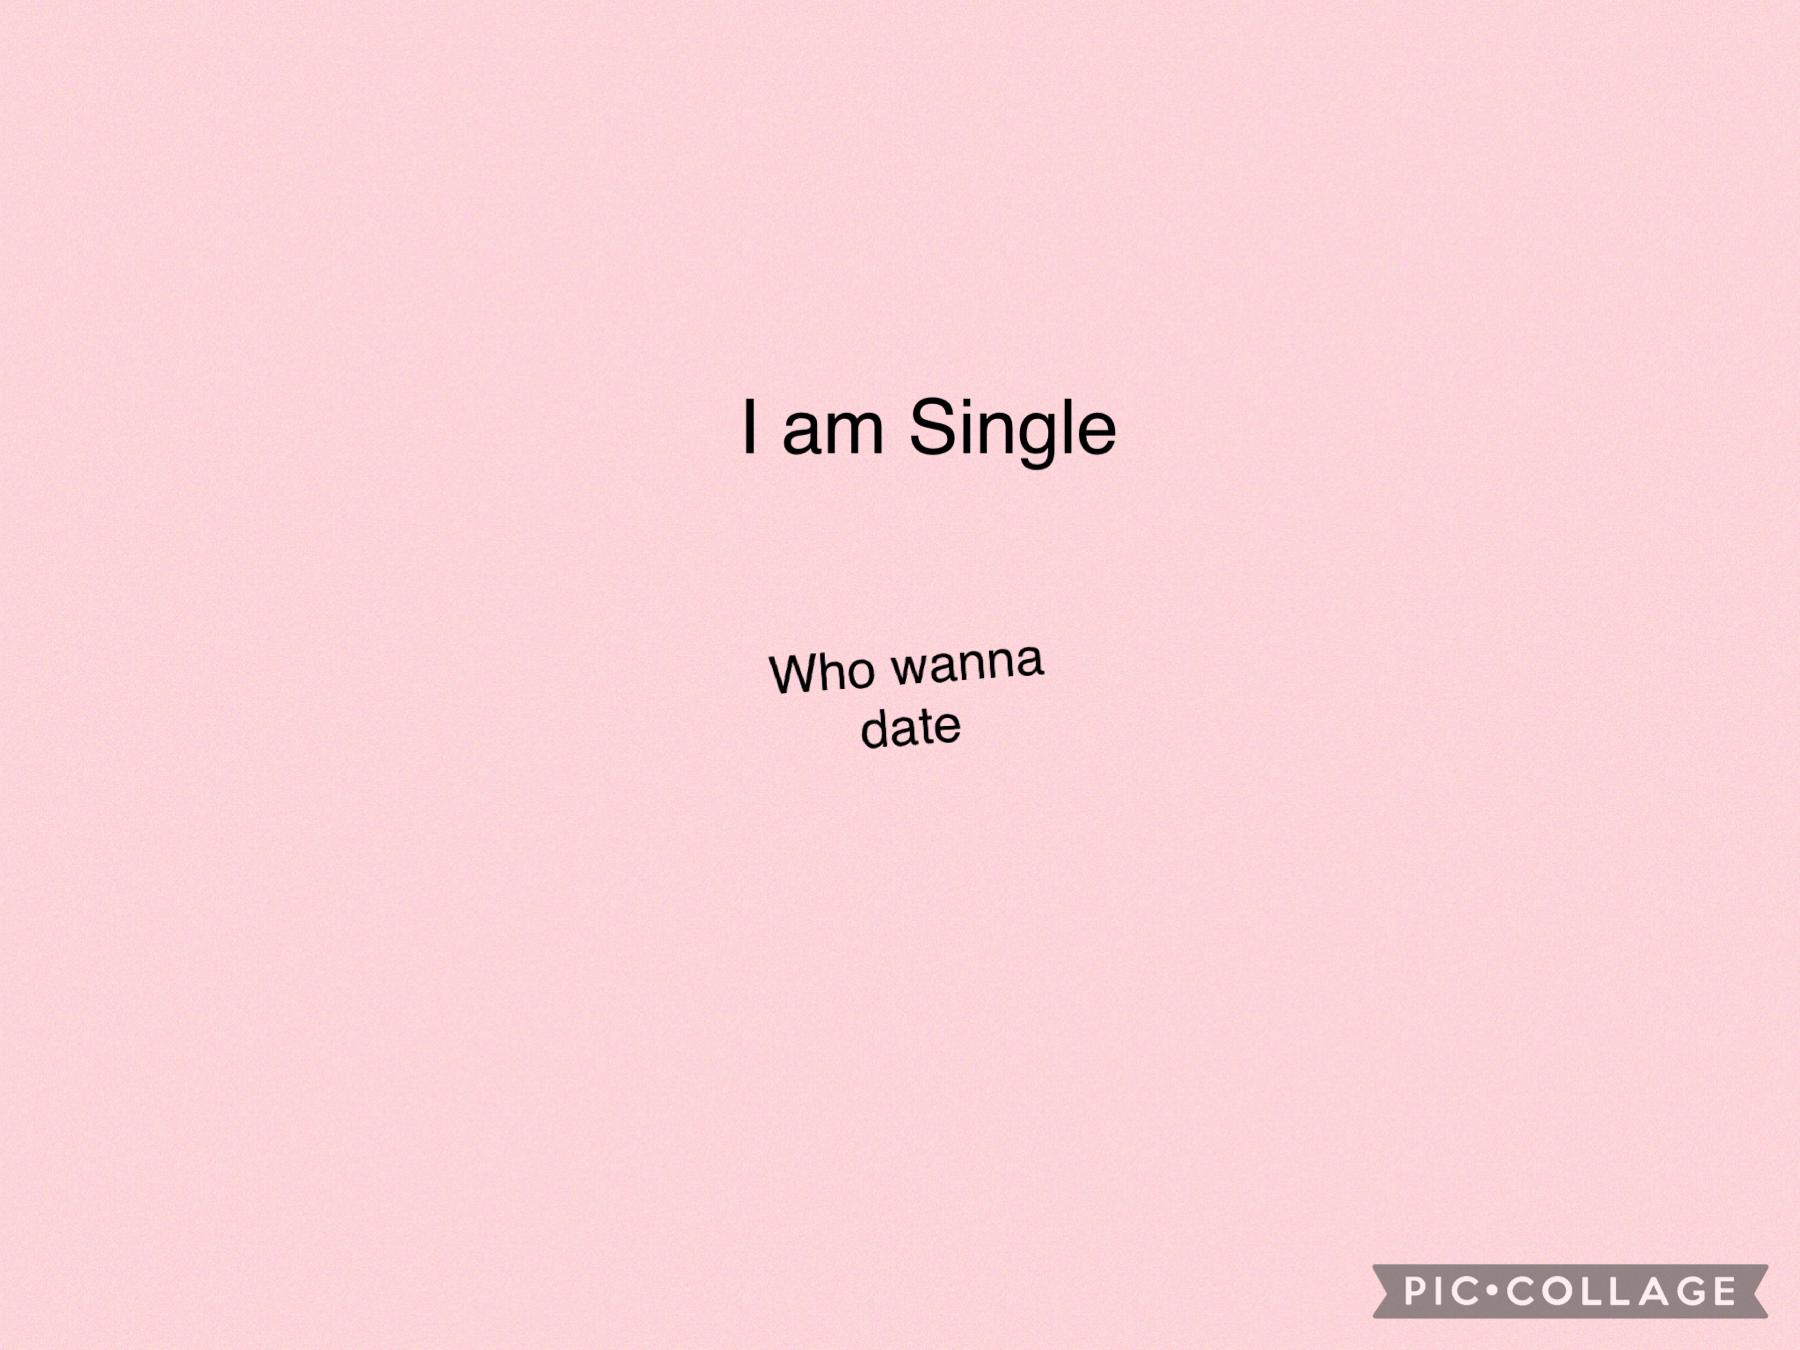 Hi i am kevin i am single